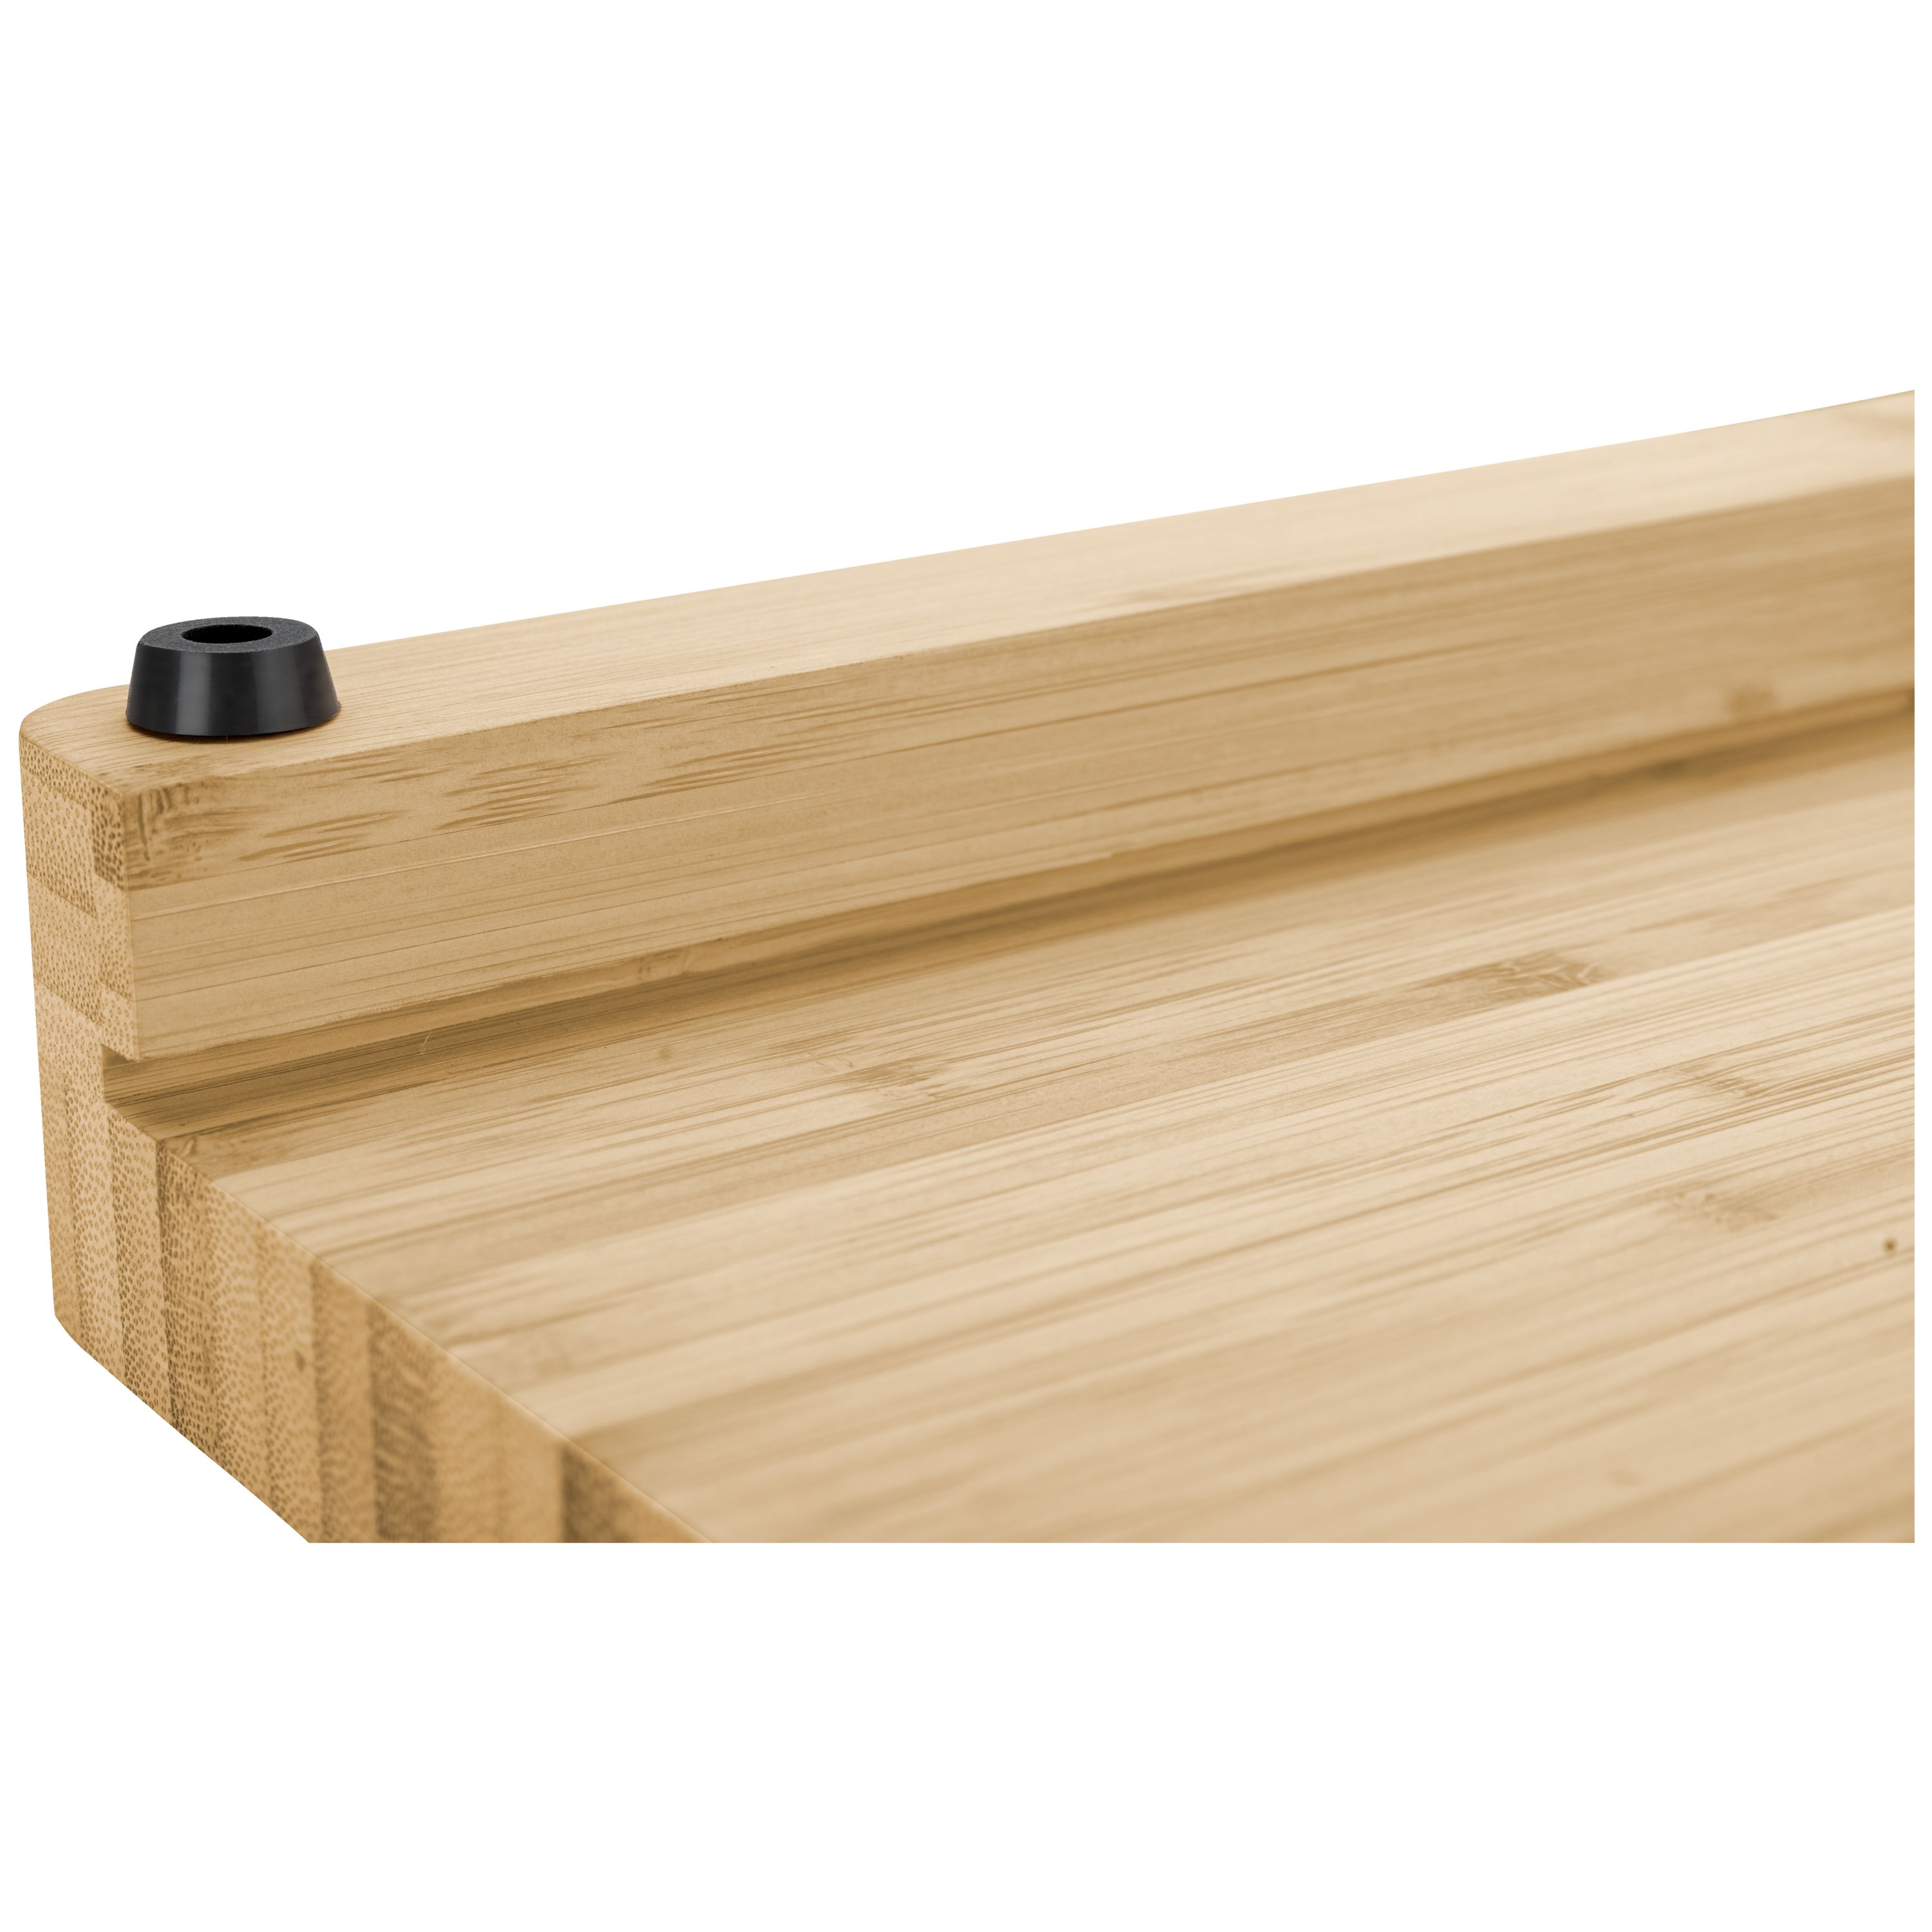 Zwilling 30772-100 Chopping Board Bamboo Medium 35.5 x 25 cm